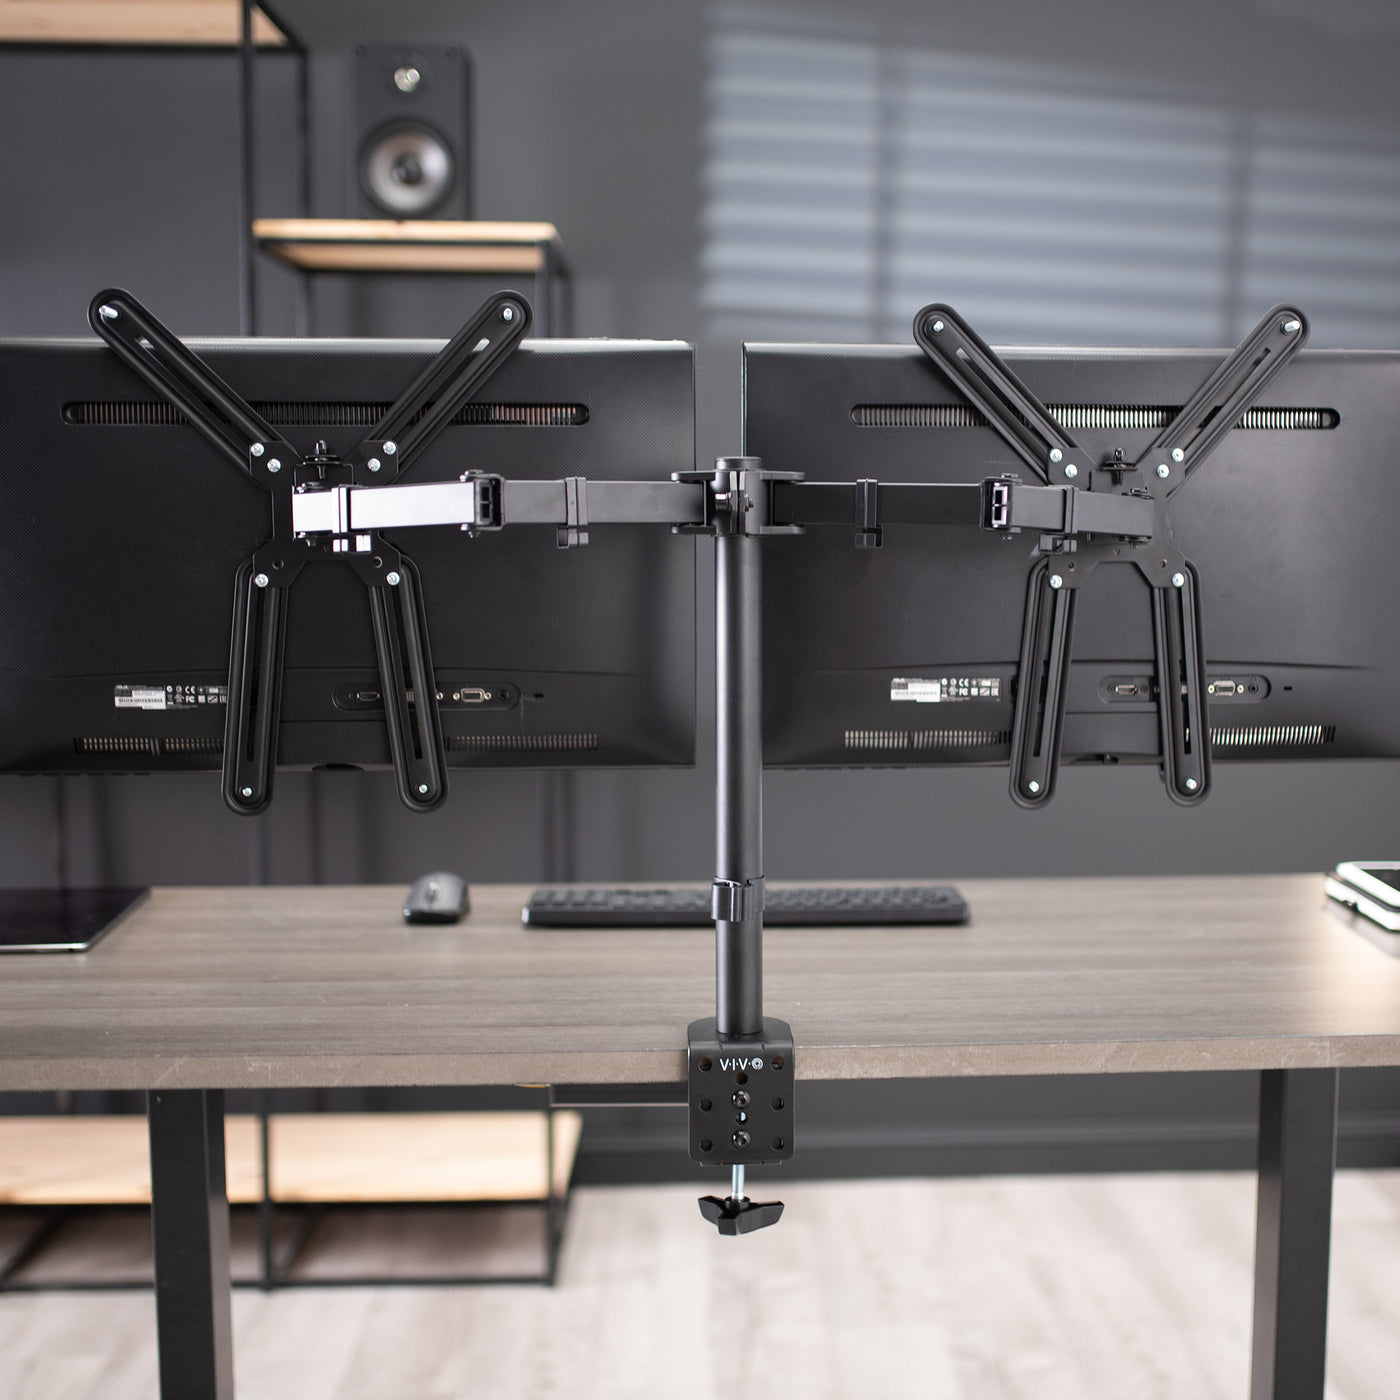 Dual monitor desk mount with VESA Adapter bracket designed for monitors lacking VESA compatibility.